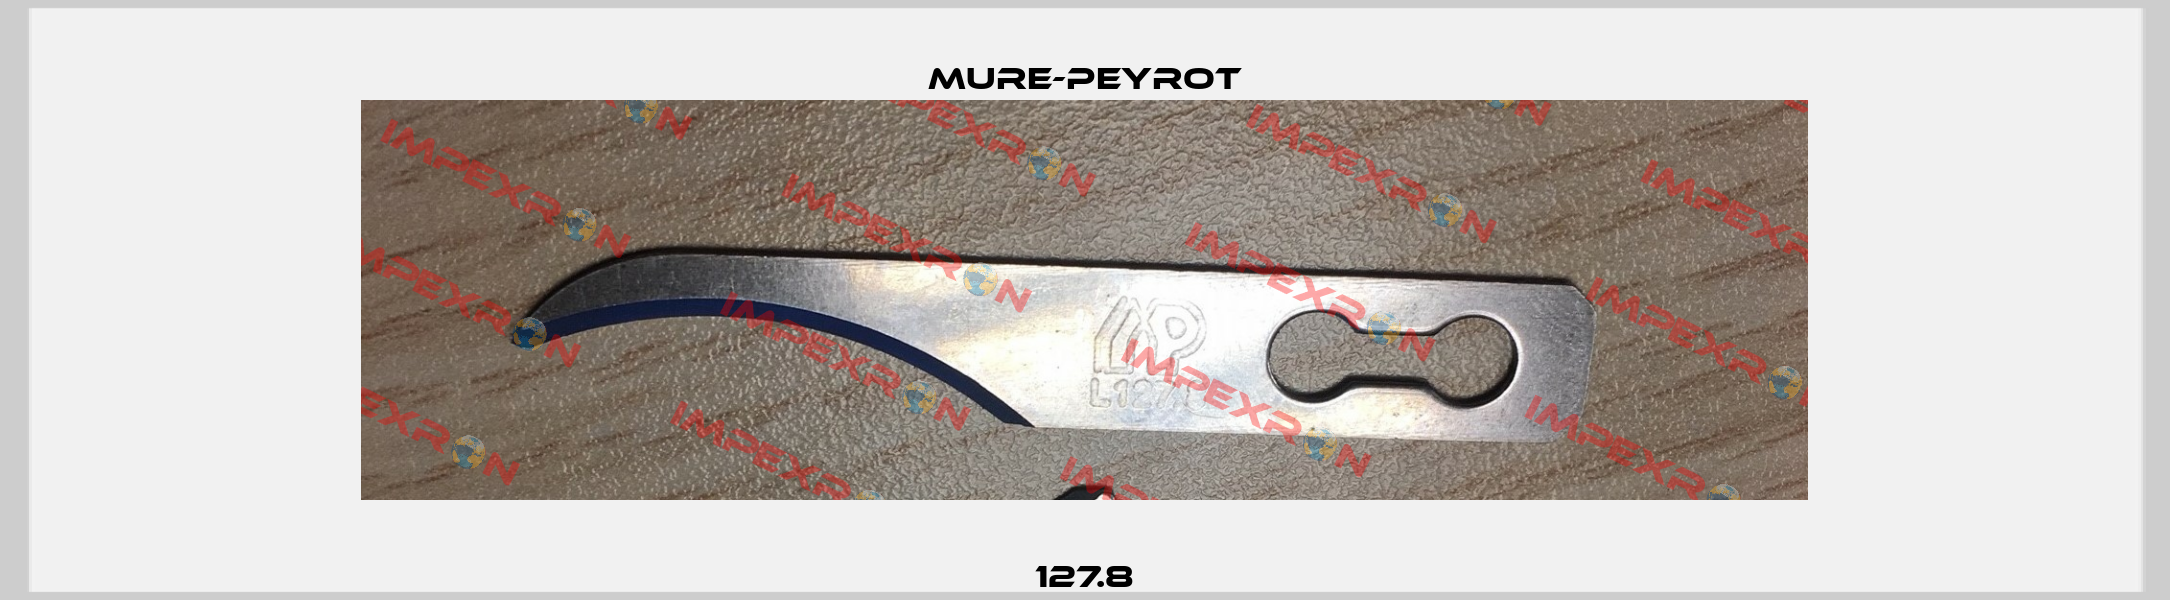 127.8 Mure-Peyrot